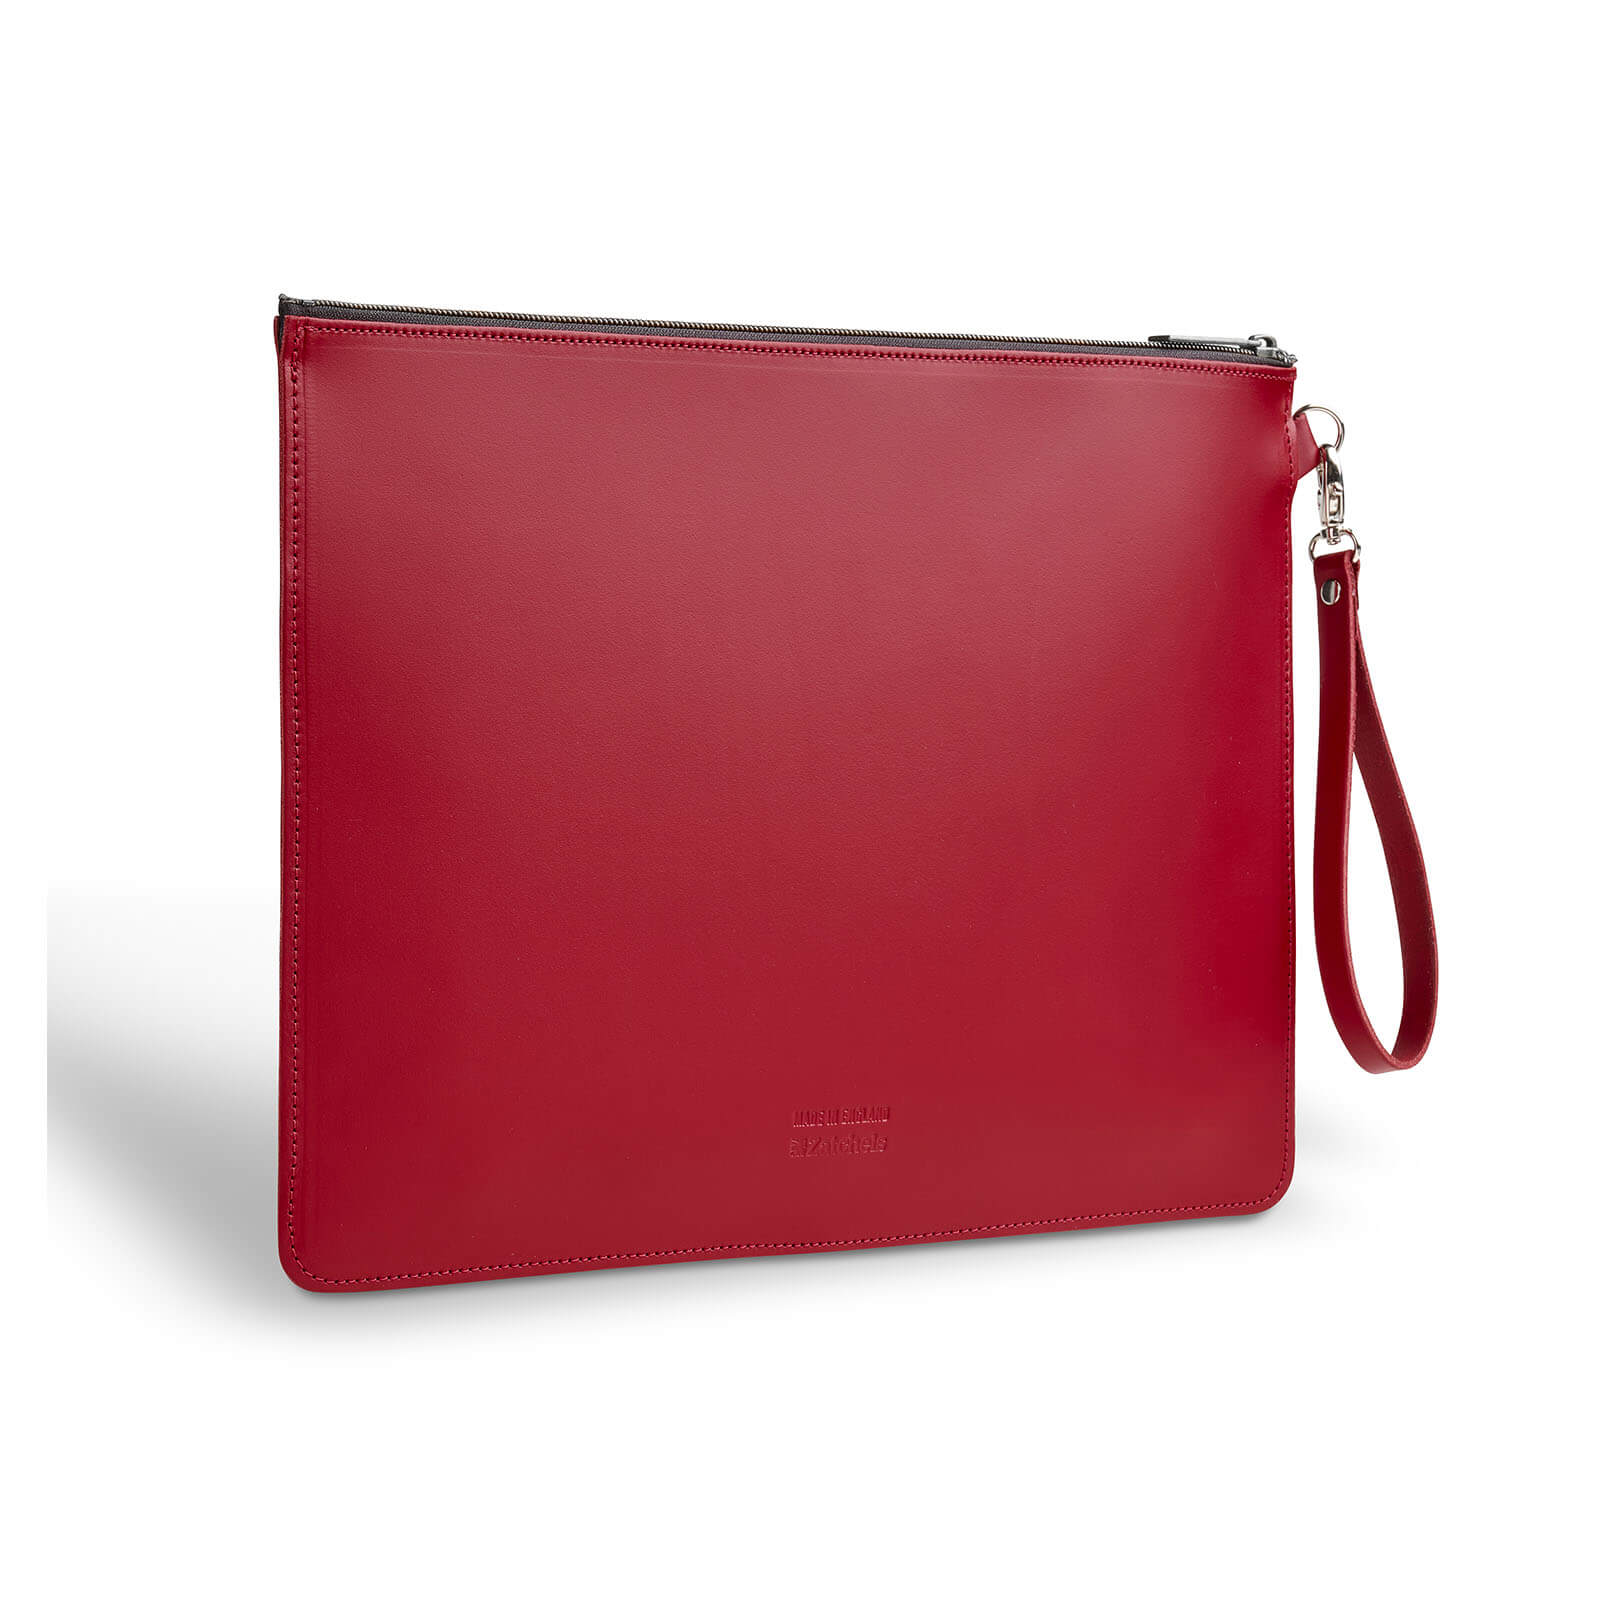 Handmade Leather Folio Case - Red - Large